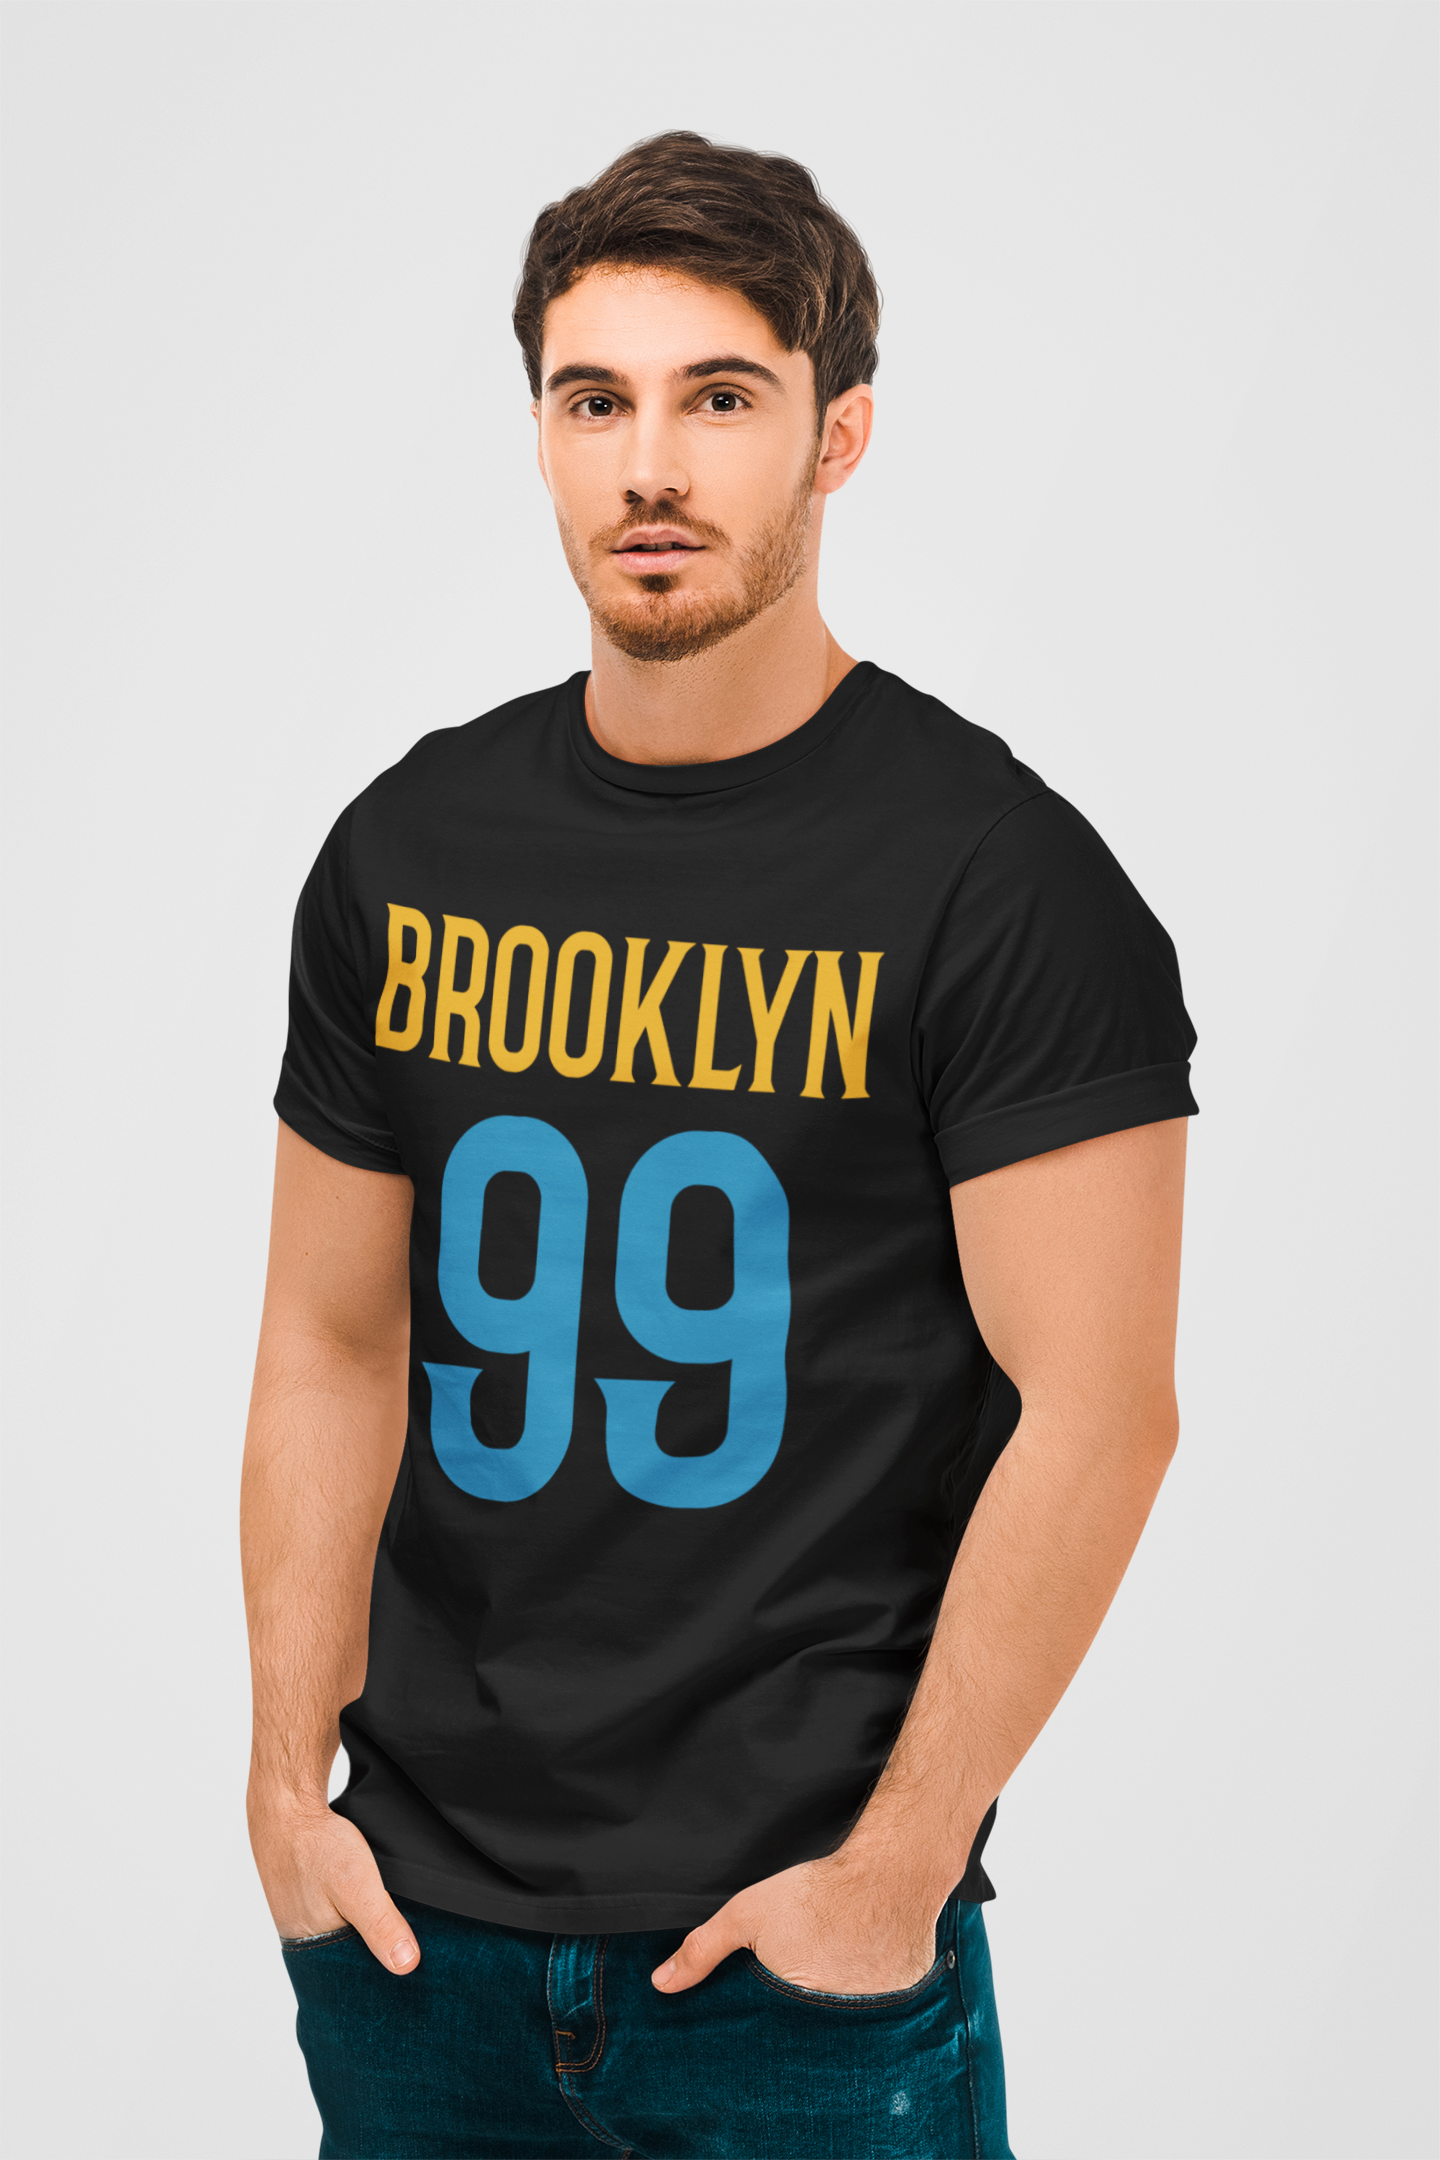 Brooklyn 99 Black Round Neck T-Shirt for Men. 